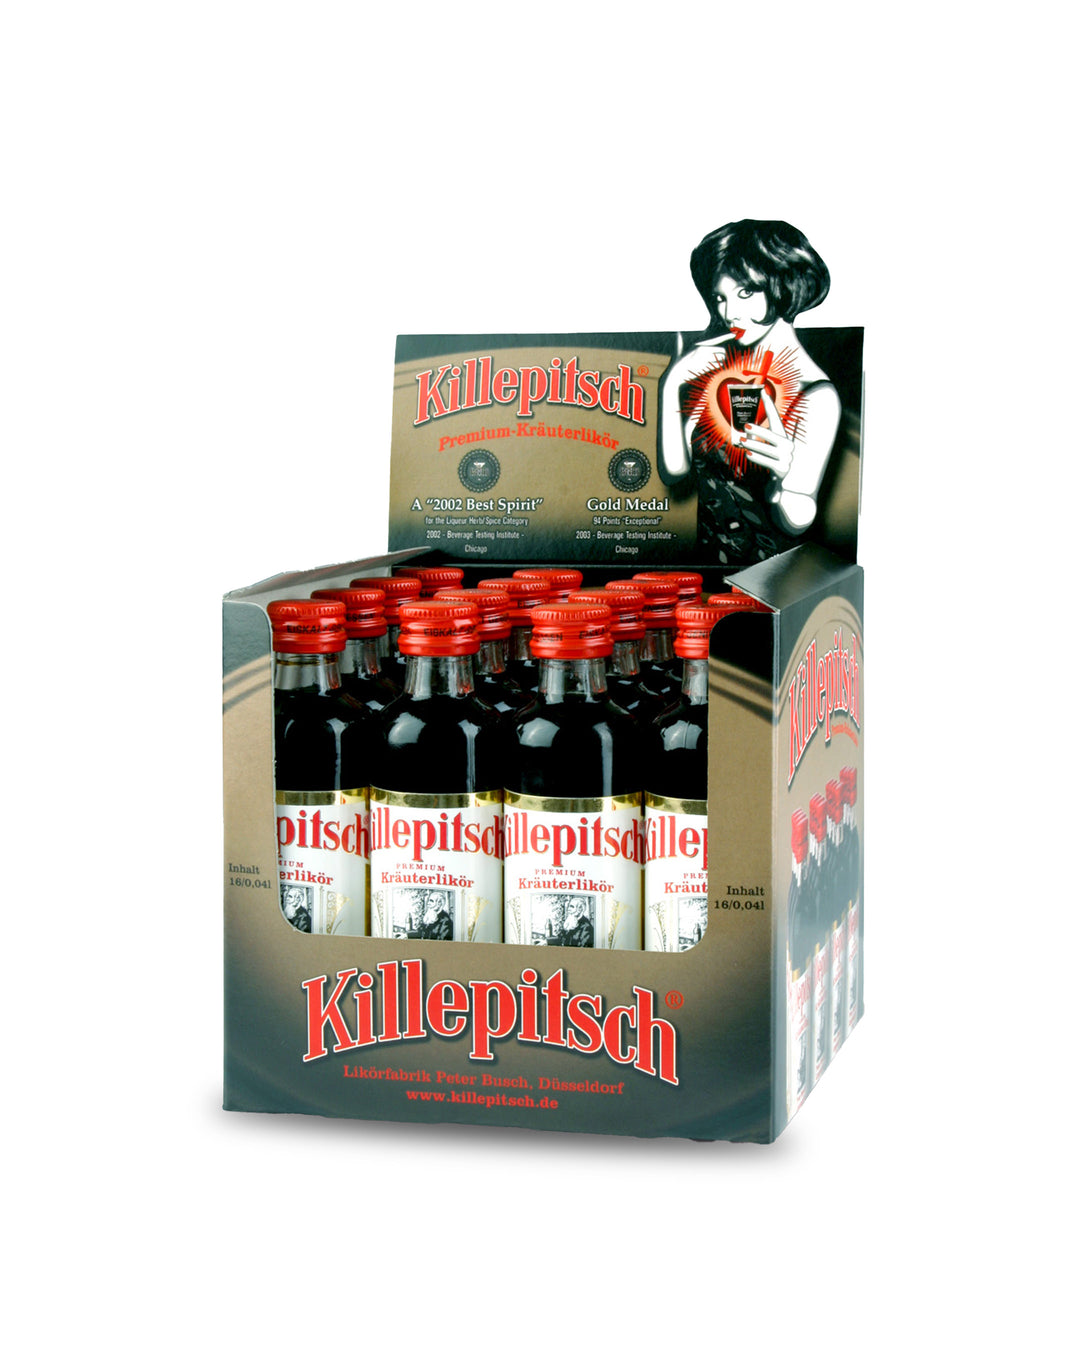 Killepitsch 42% - Premium-Kräuterlikör Display 16 x 40ml